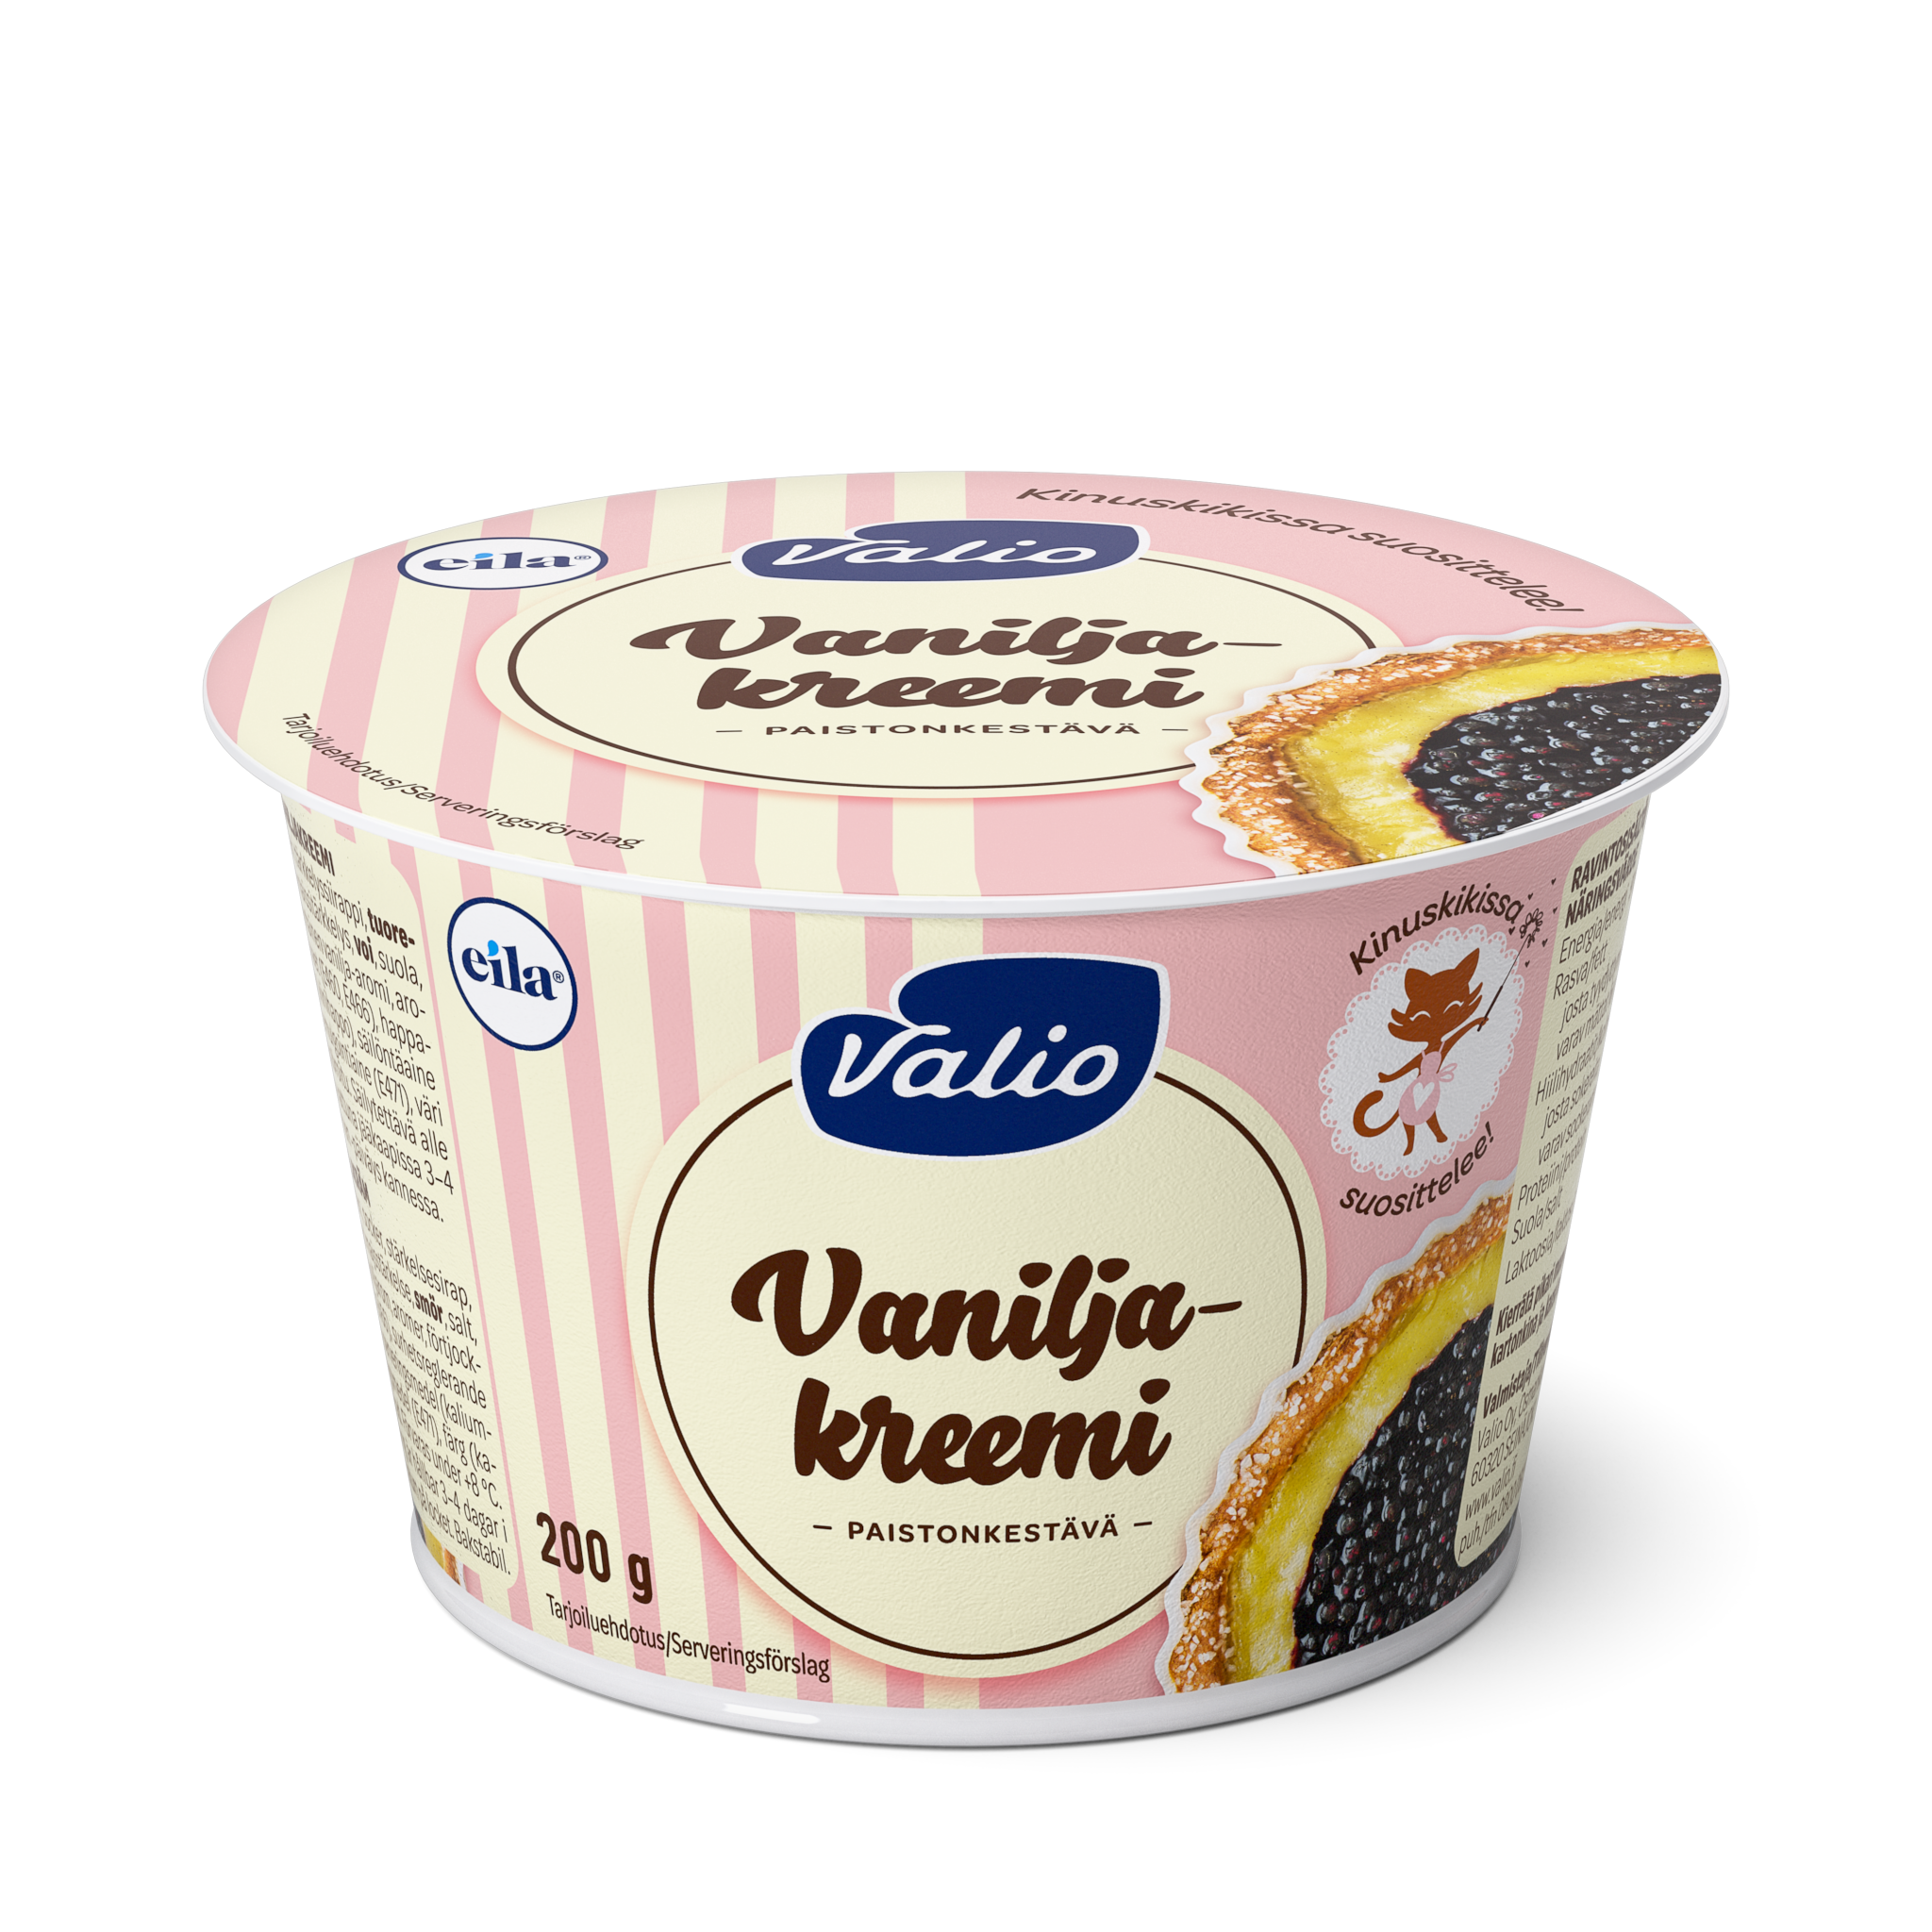 Valio vaniljakreemi | Valio